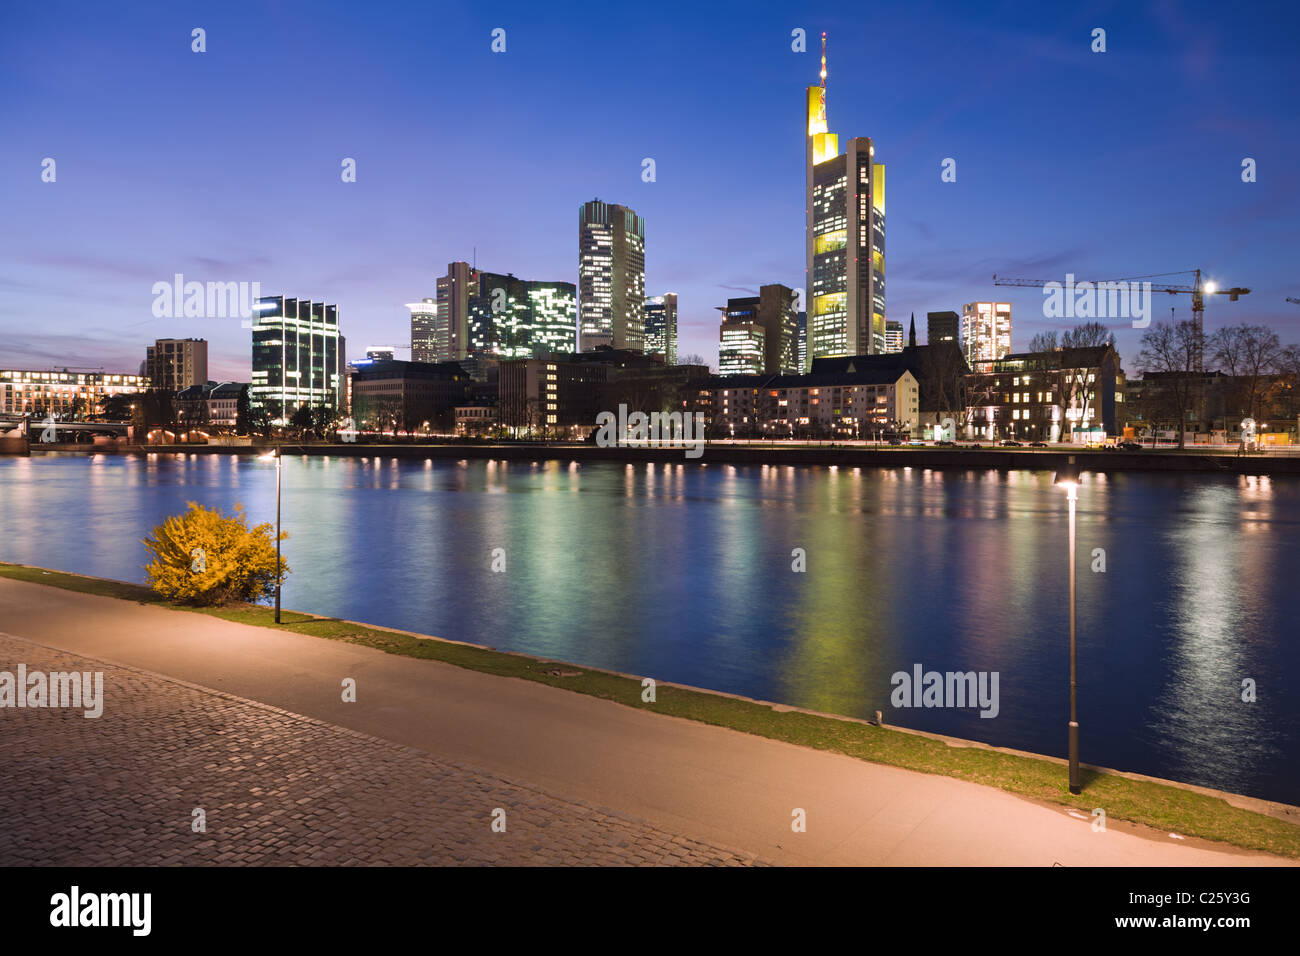 The river Main at Frankfurt, Germany, with the city skyline at dusk. Stock Photo